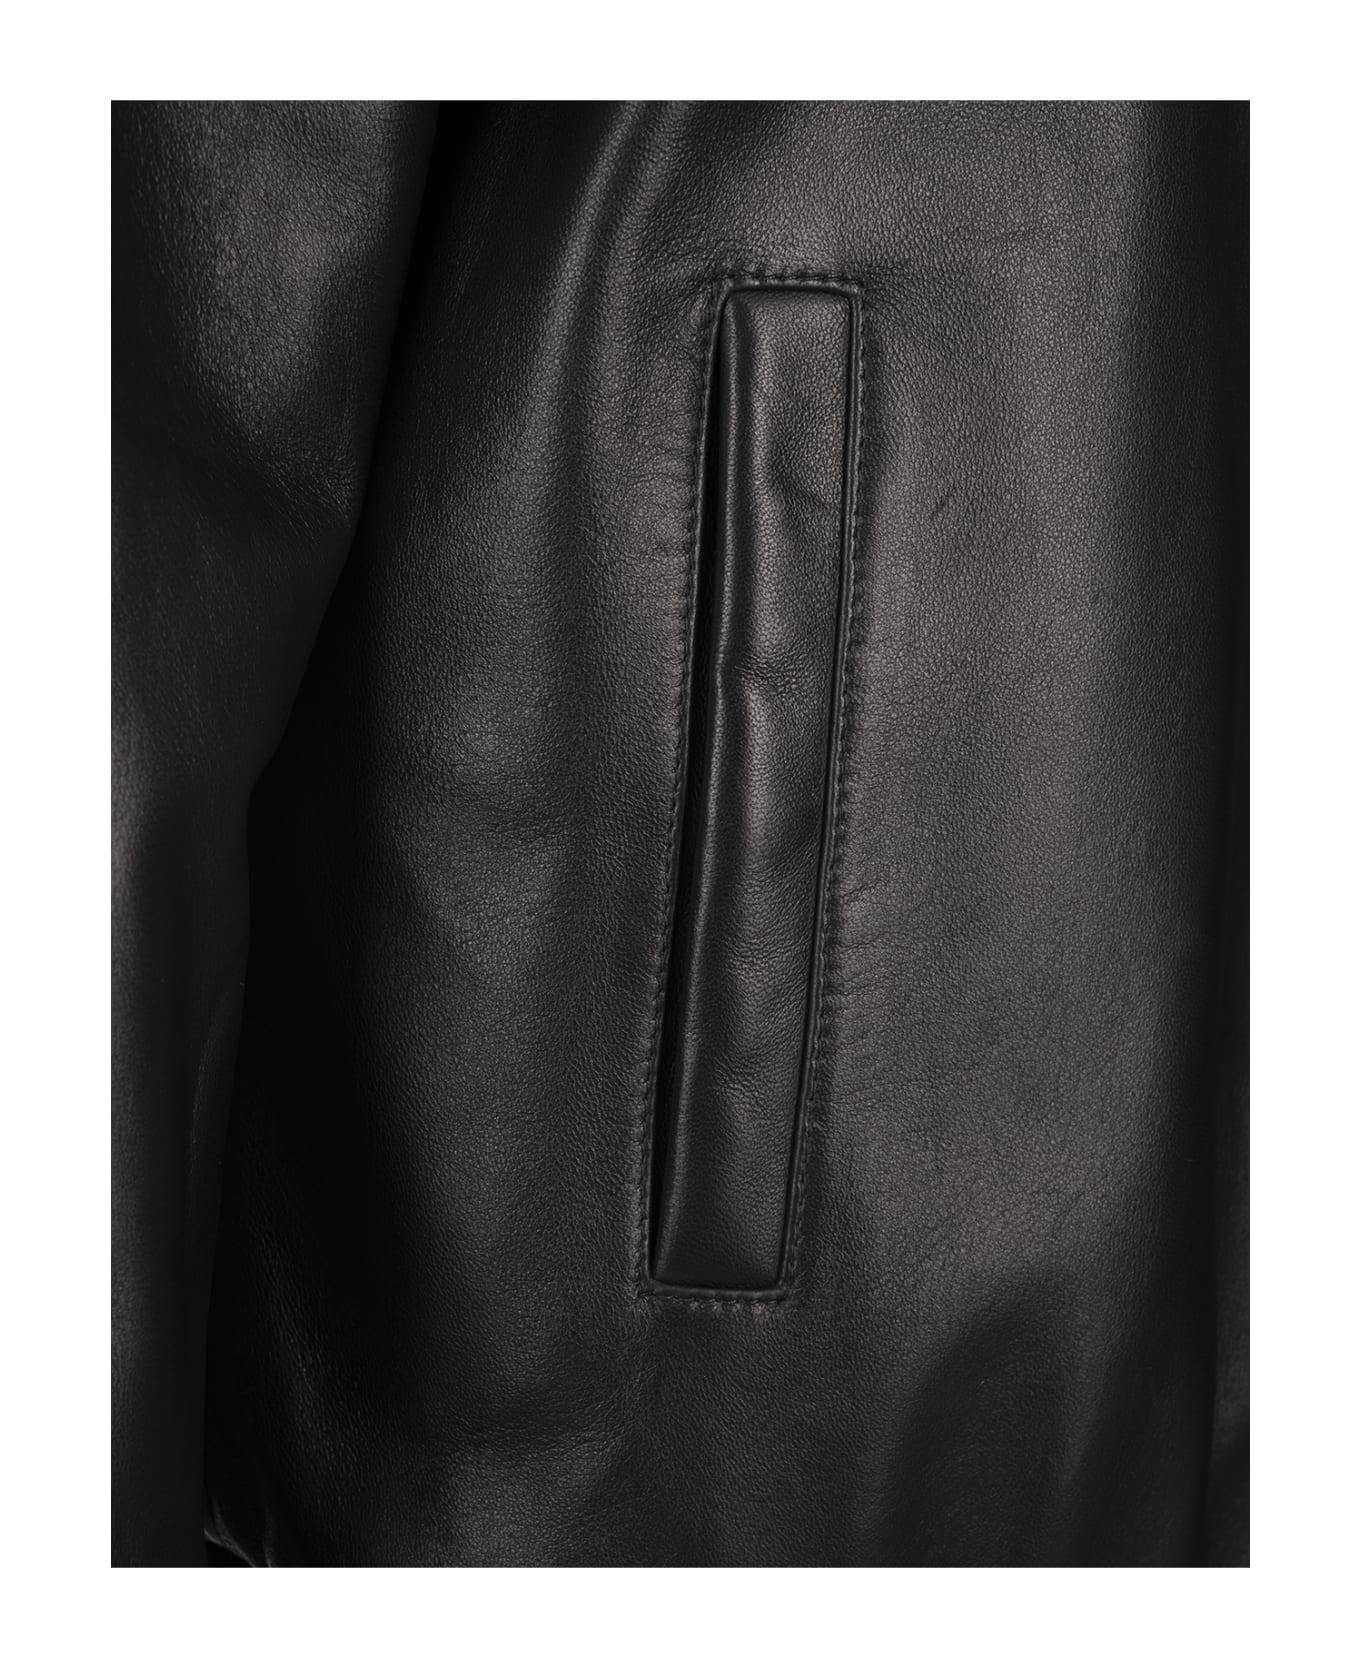 Philipp Plein Black Leather Bomber Jacket With Pp Hexagon - Black